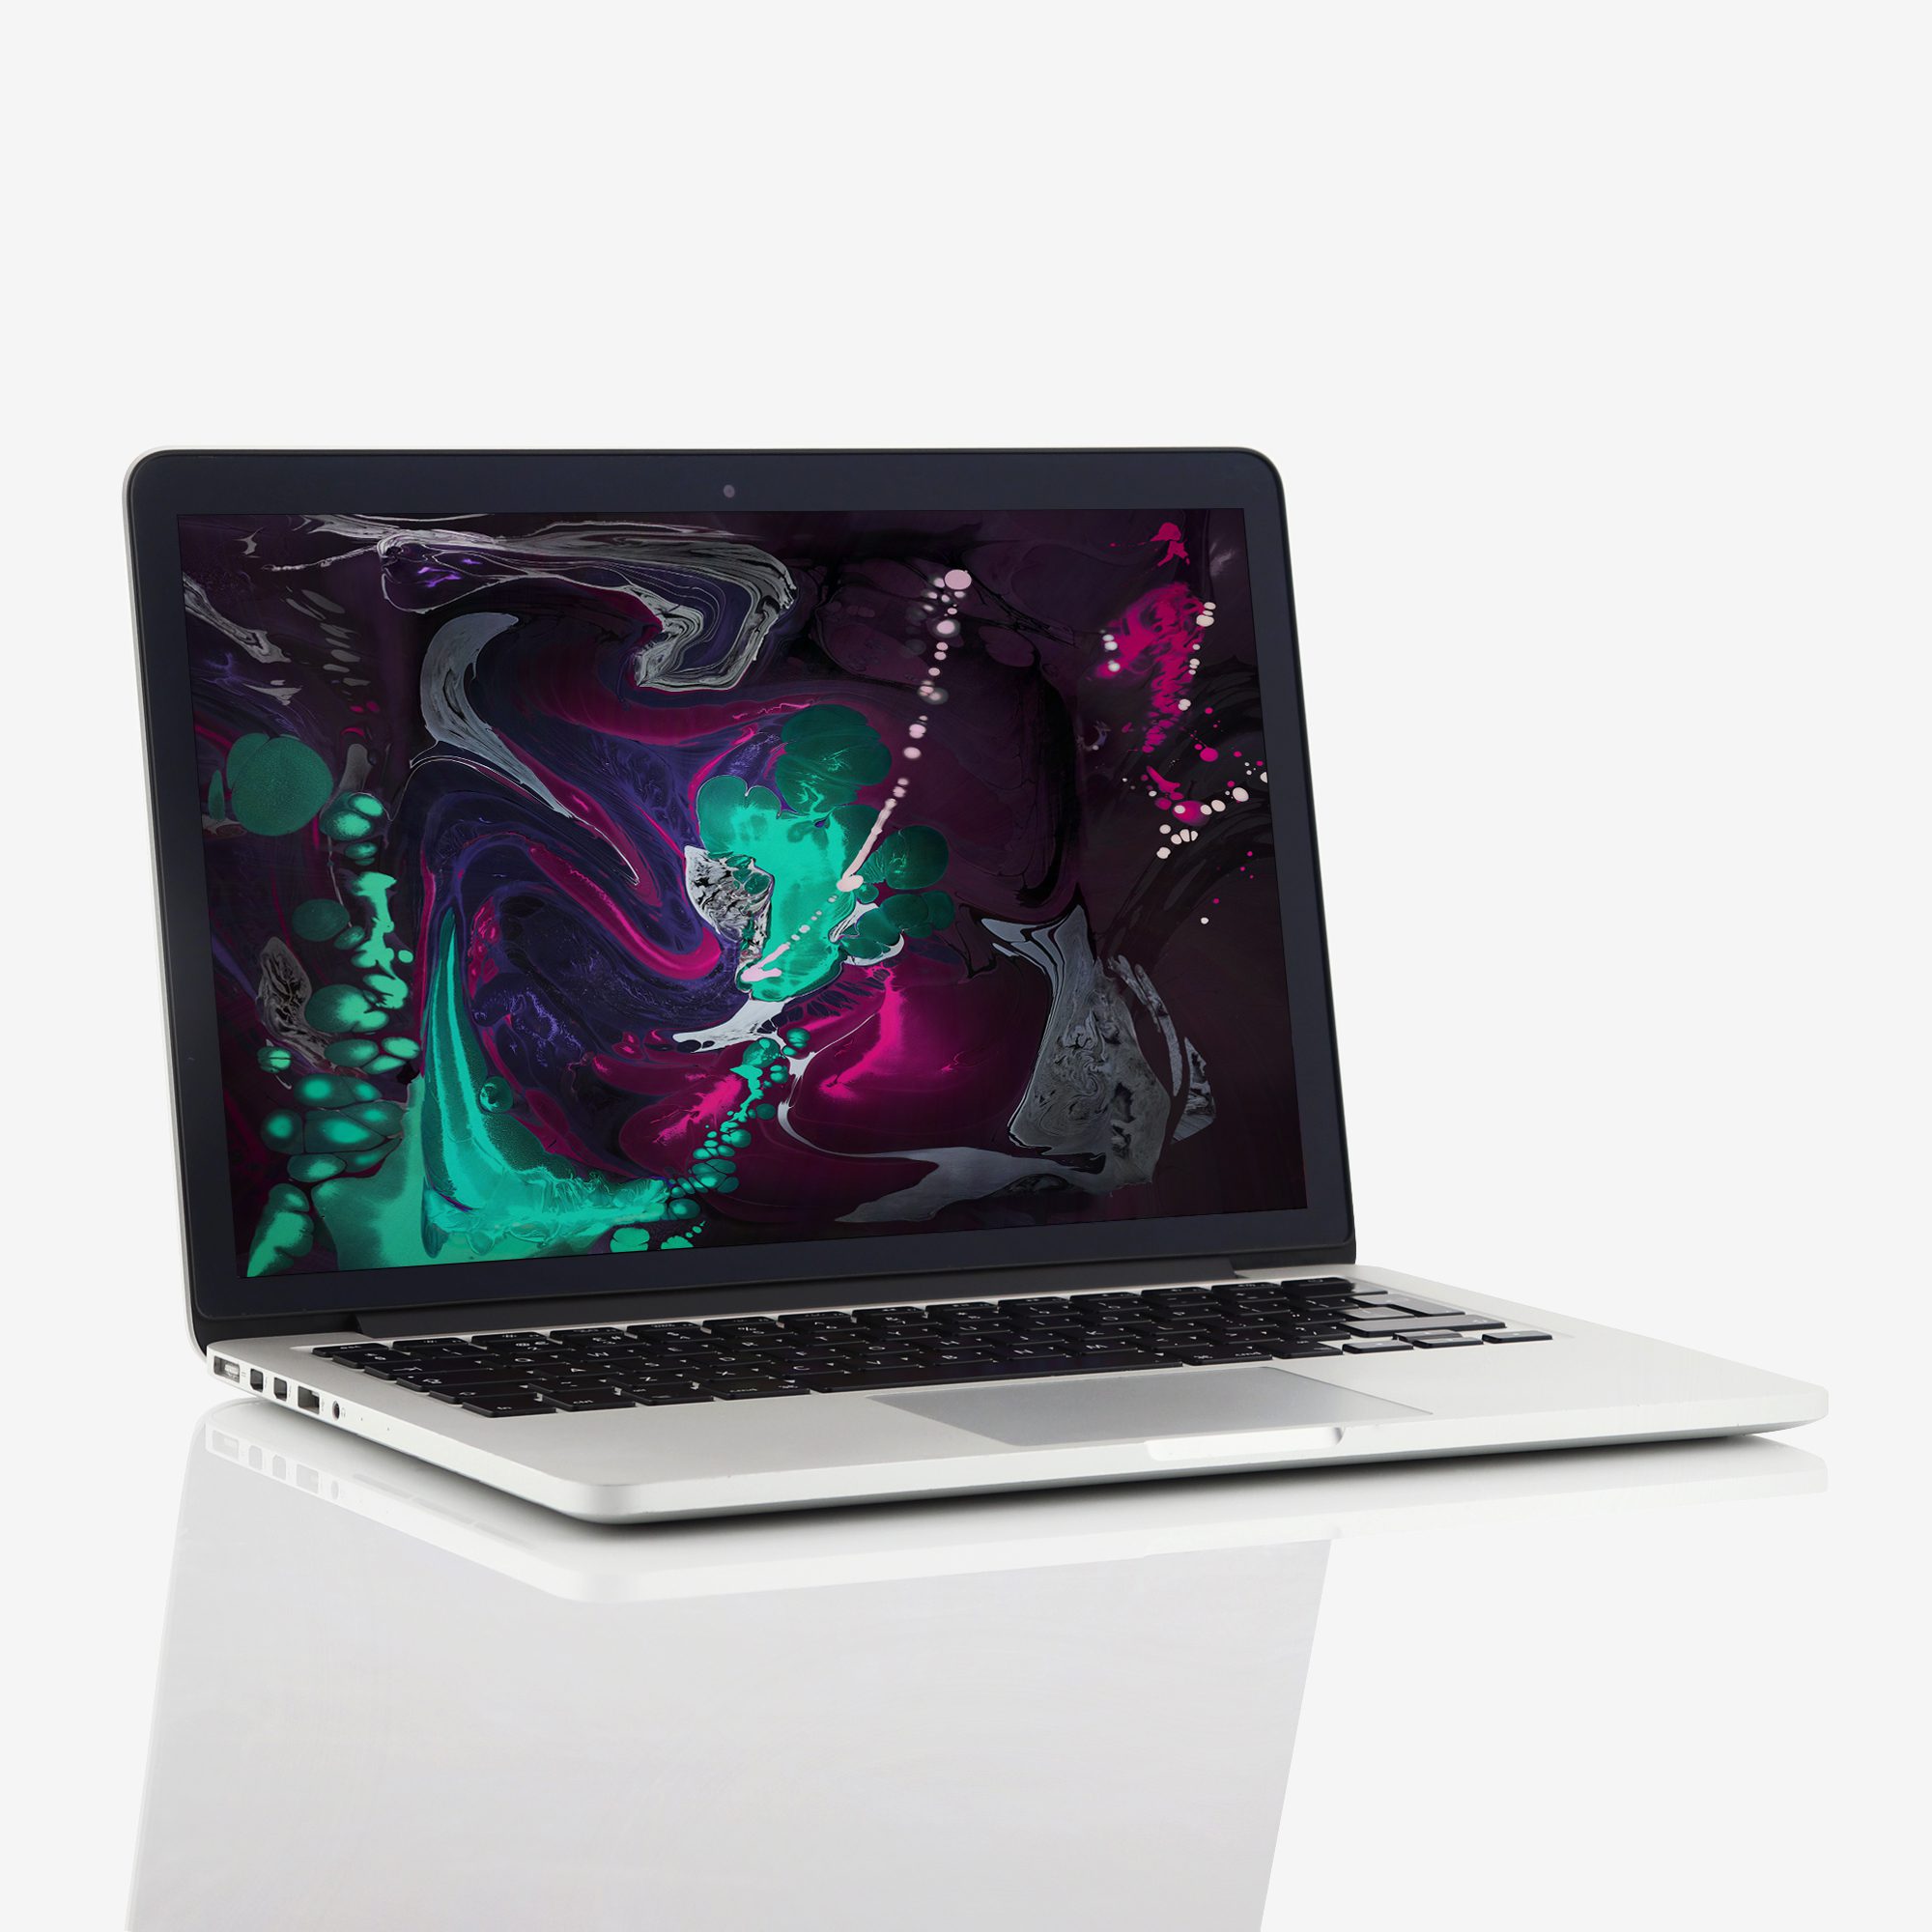 1 x Apple MacBook Pro Retina 13 Inch Dual-Core i7 3.10 GHz (2015)